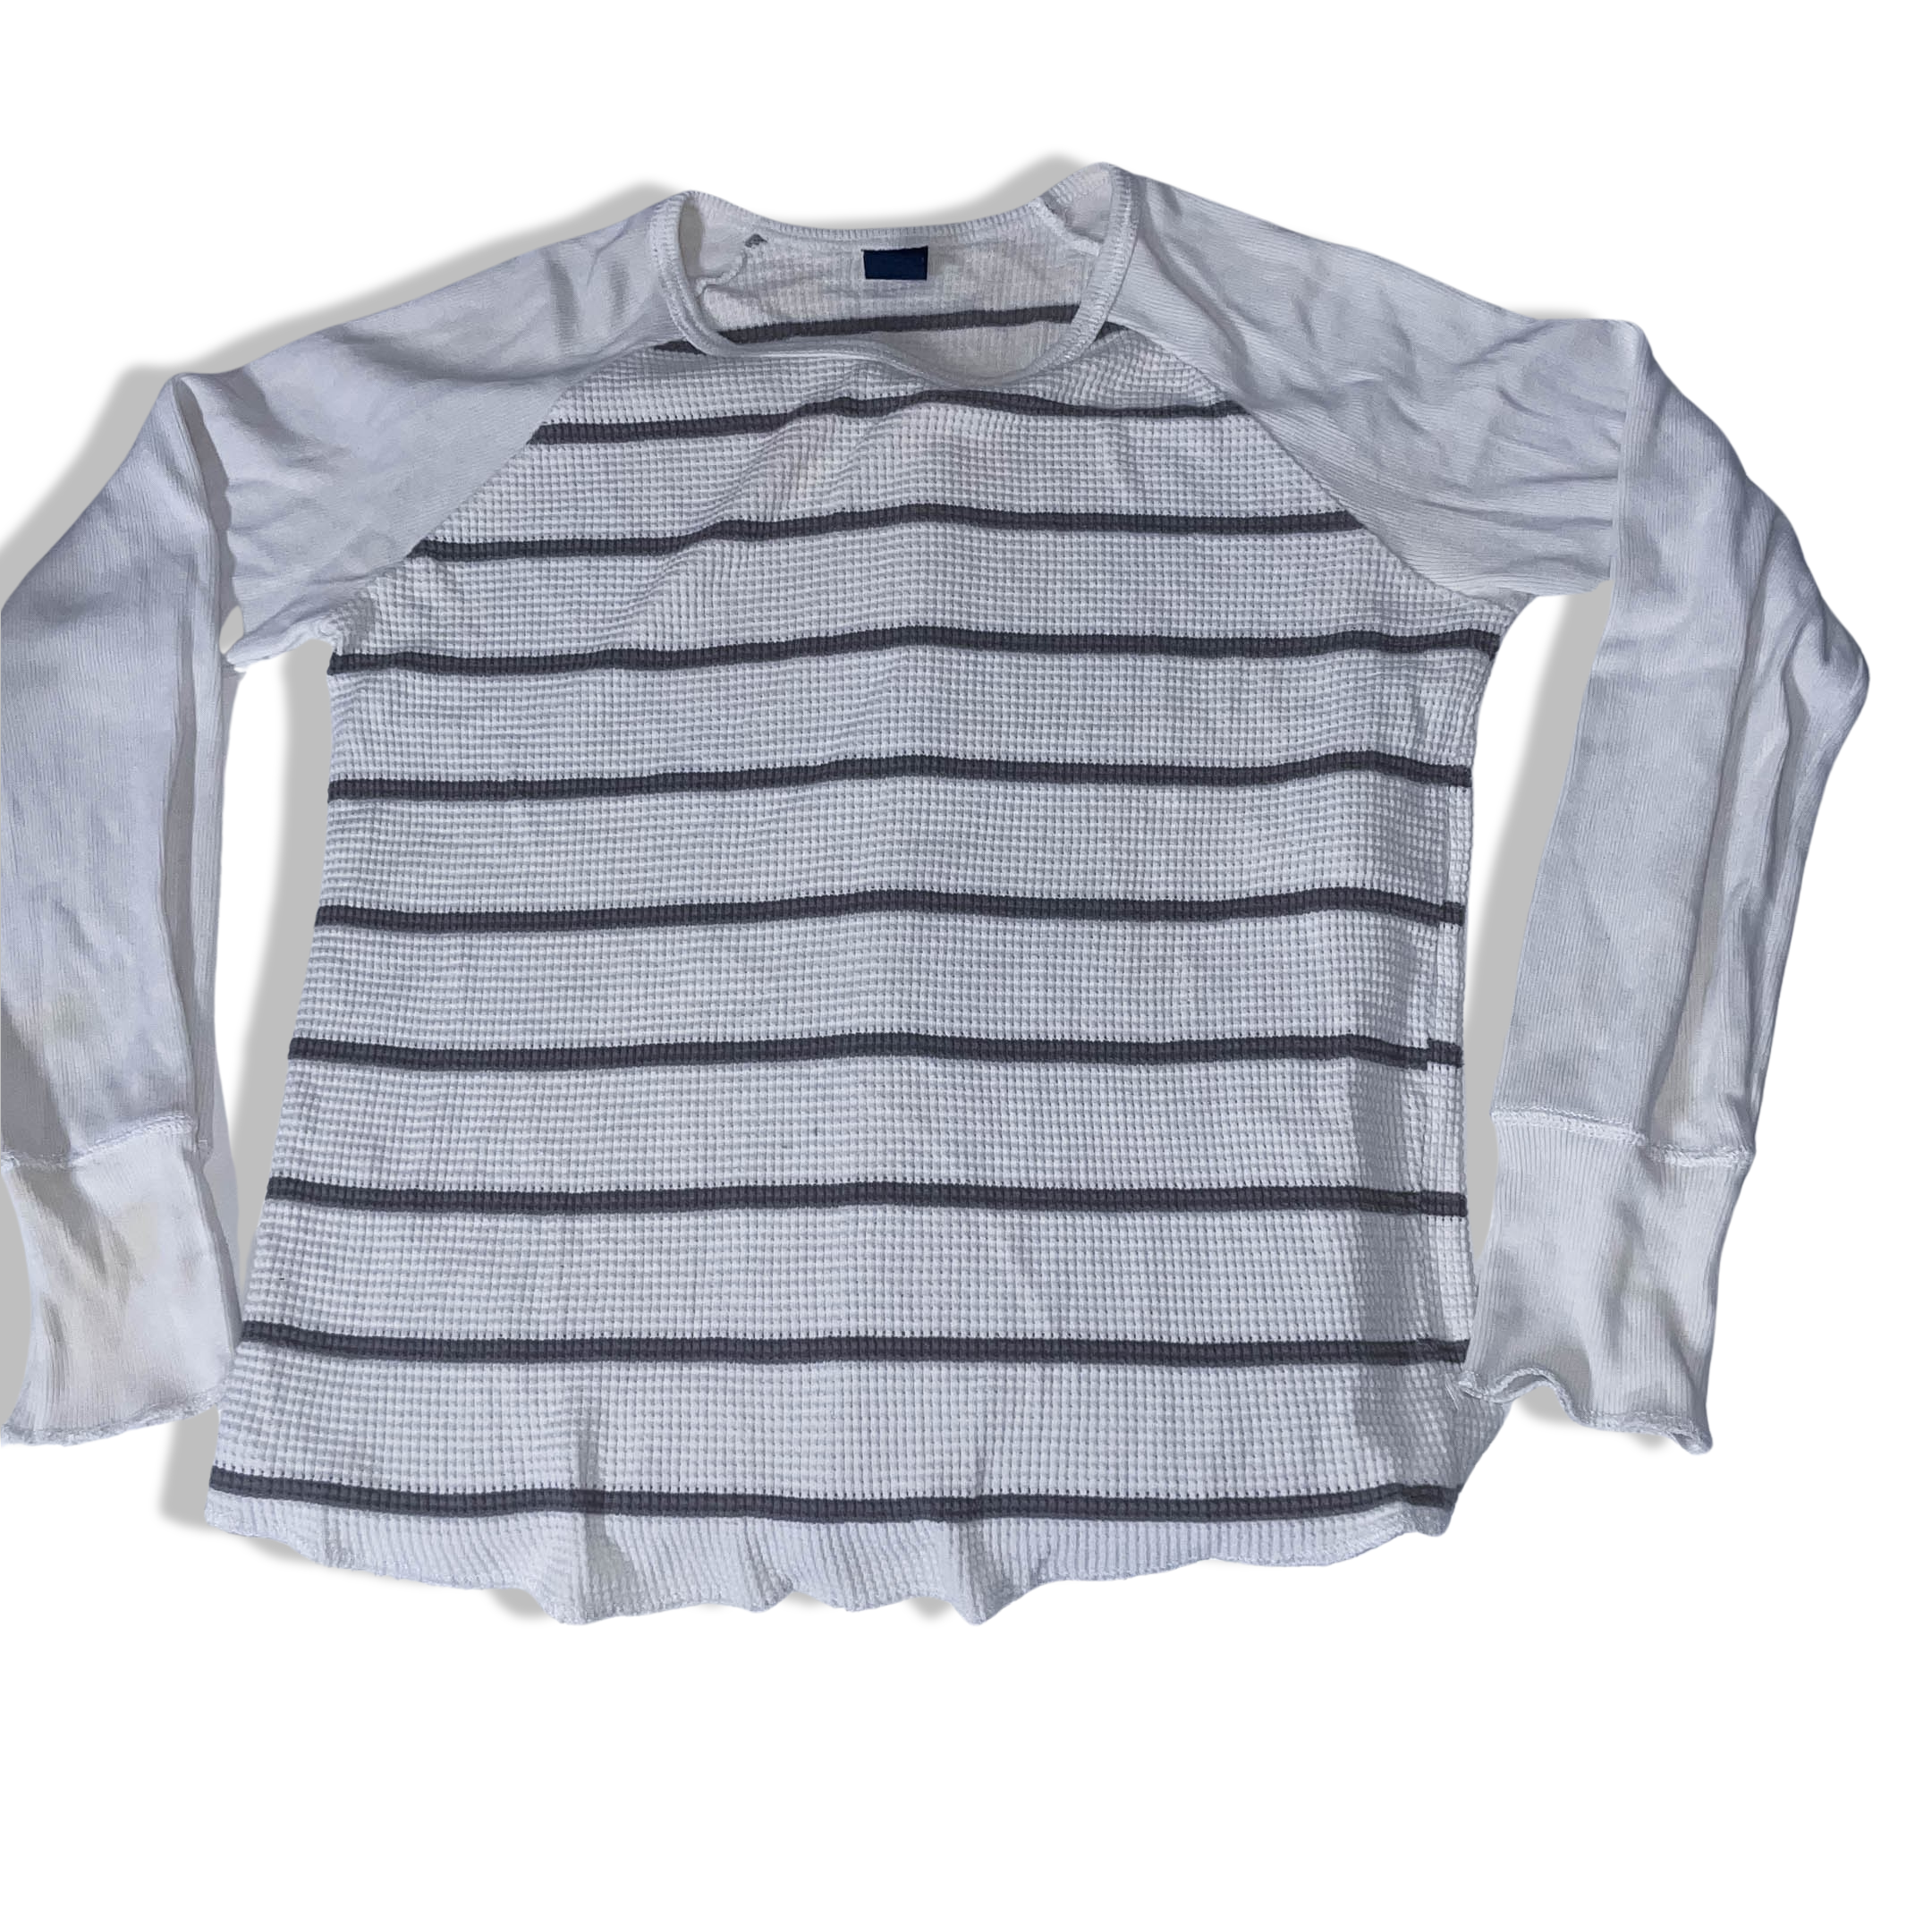 Vintage Gap white stripe sweatshirt XS